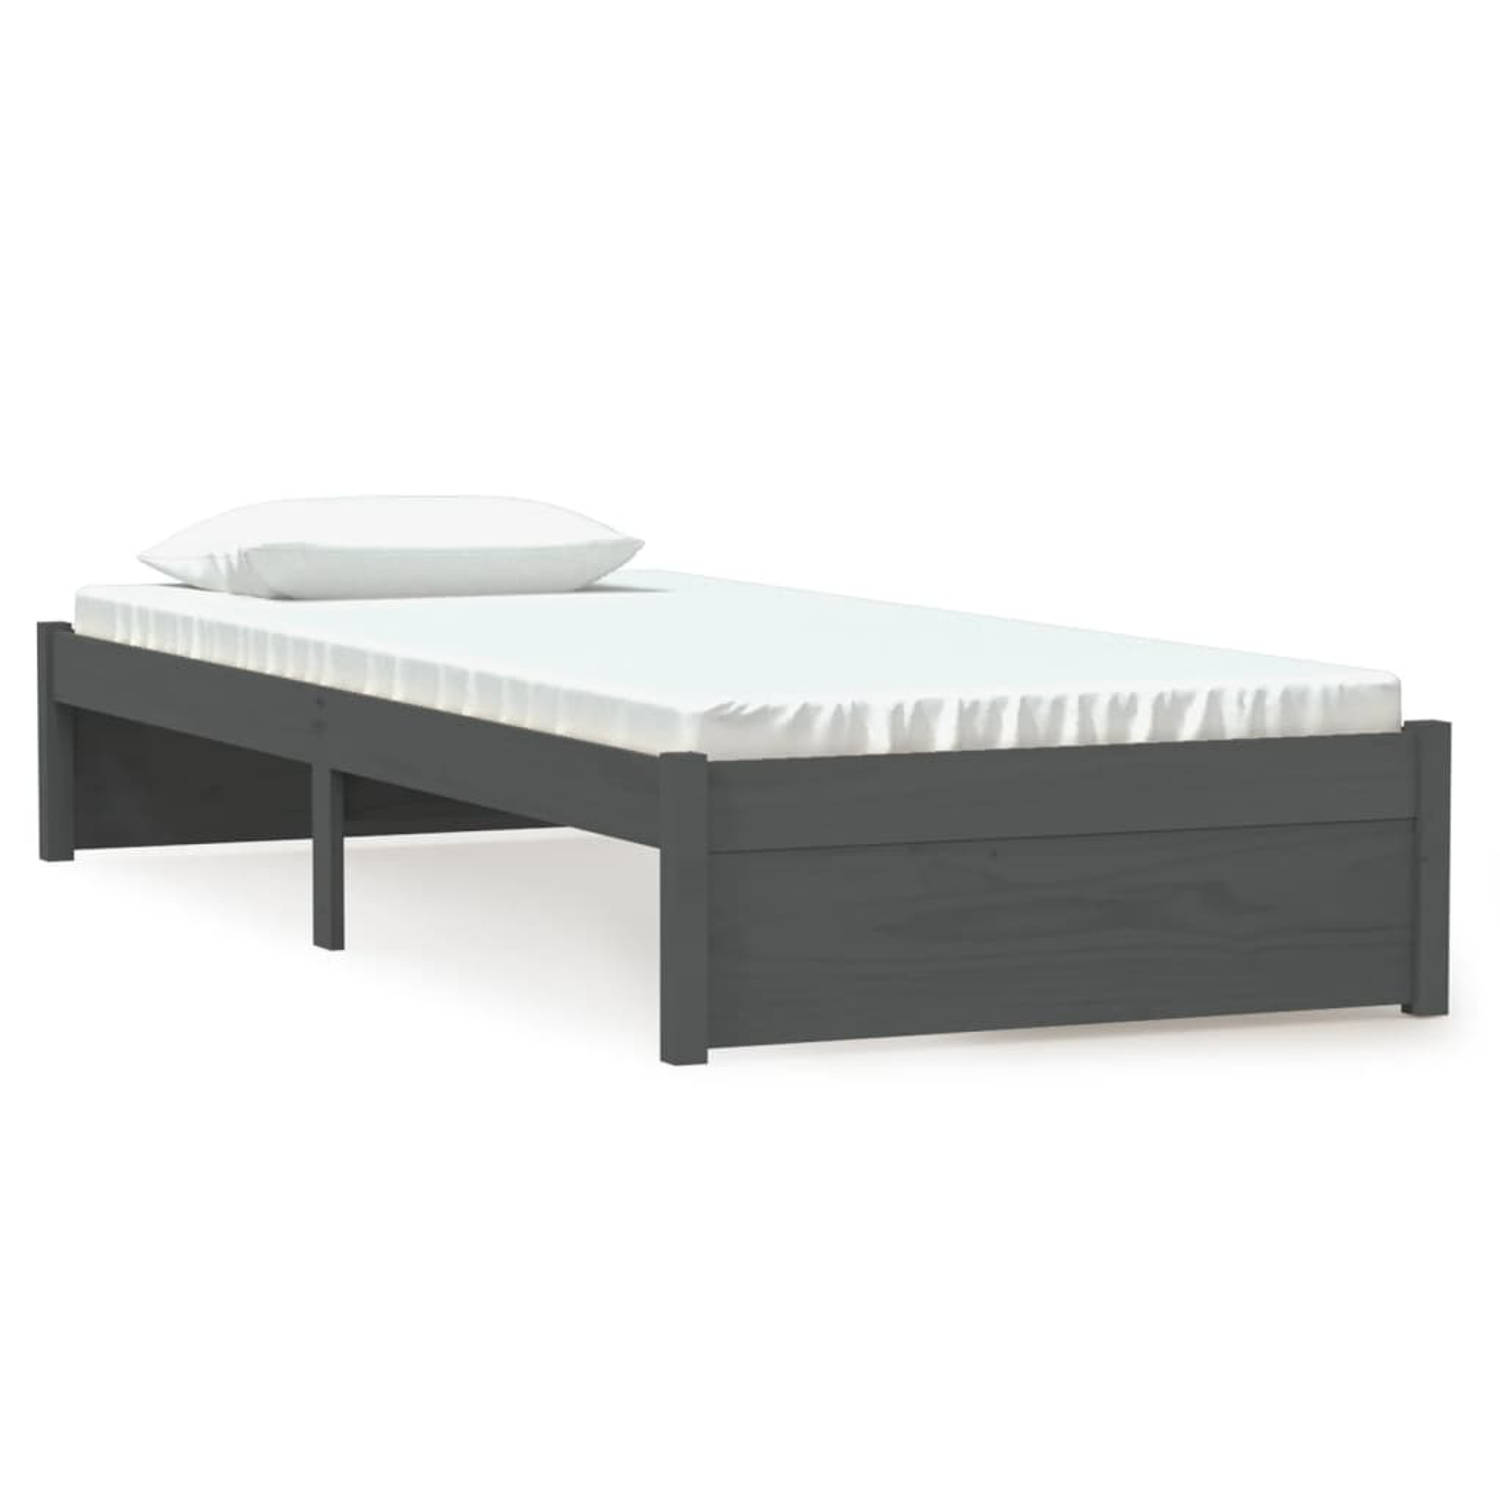 The Living Store Bedframe massief hout grijs 75x190 cm 2FT6 Small Single - Bedframe - Bedframes - Bed - Bedbodem - Ledikant - Bed Frame - Massief Houten Bedframe - Slaapmeubel - Ee